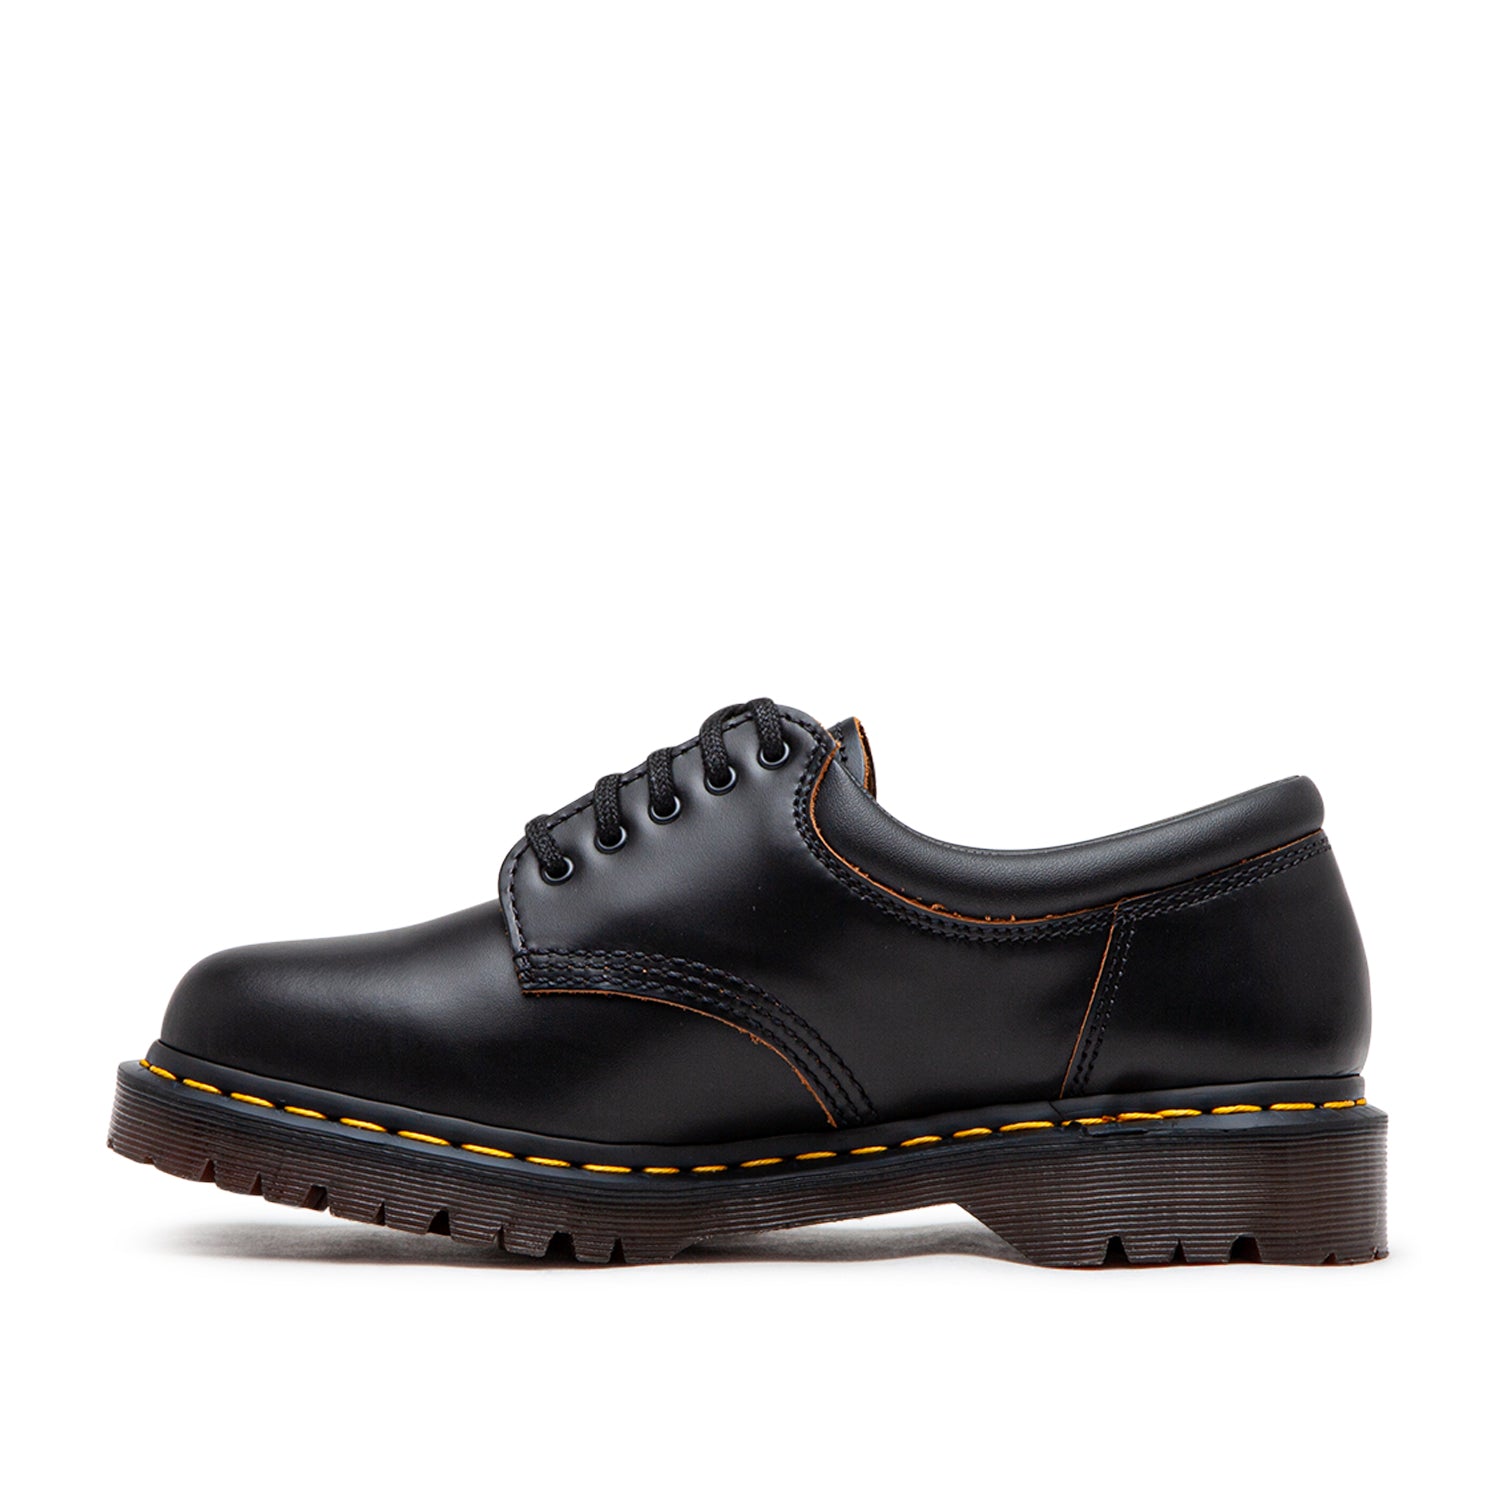 Dr. Martens 8053 Vintage Smooth Leather Oxford Shoes (Schwarz)  - Allike Store